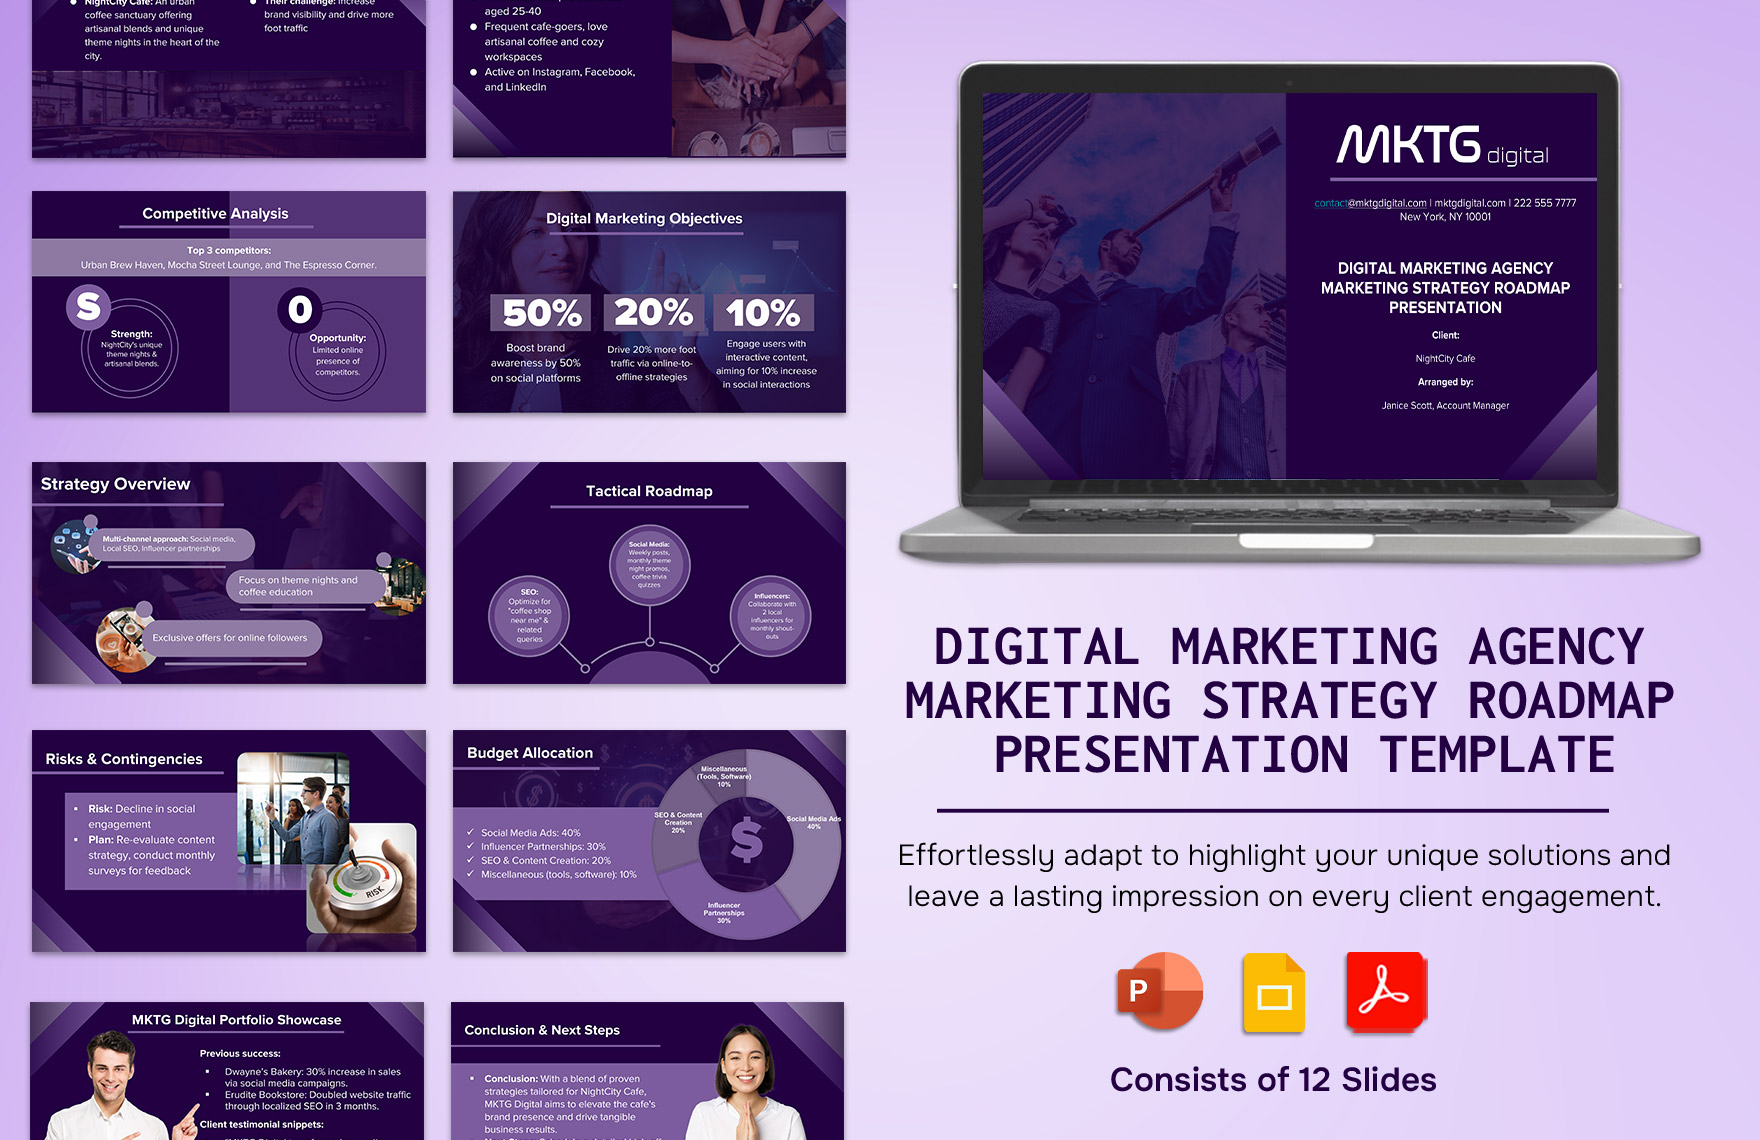 Digital Marketing Agency Marketing Strategy Roadmap Presentation Template